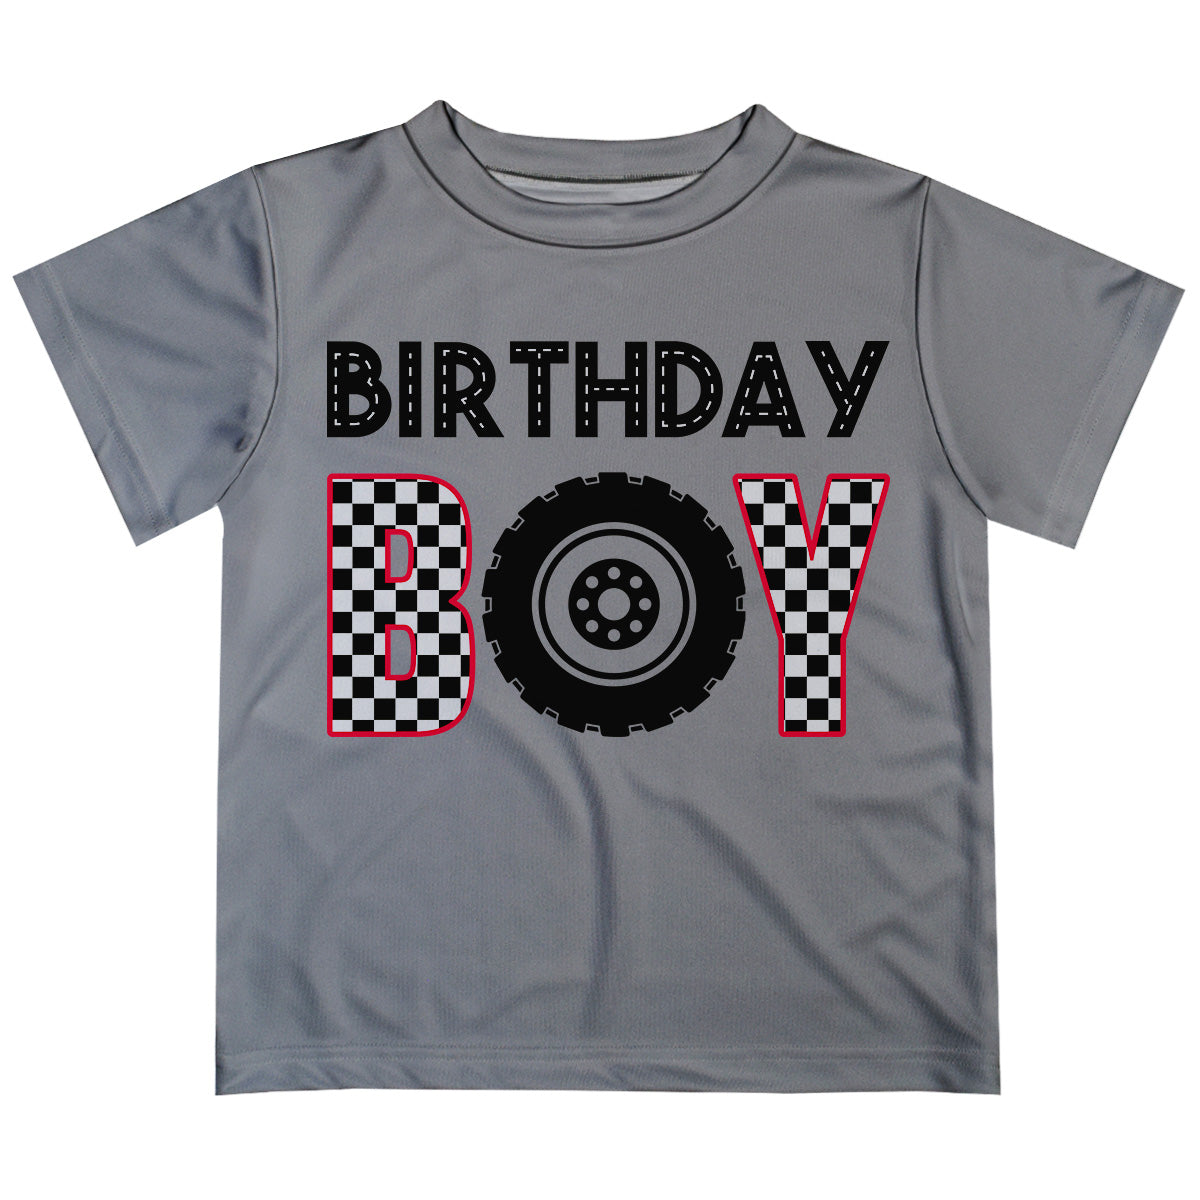 Birthday Boy Gray Short Sleeve Tee Shirt